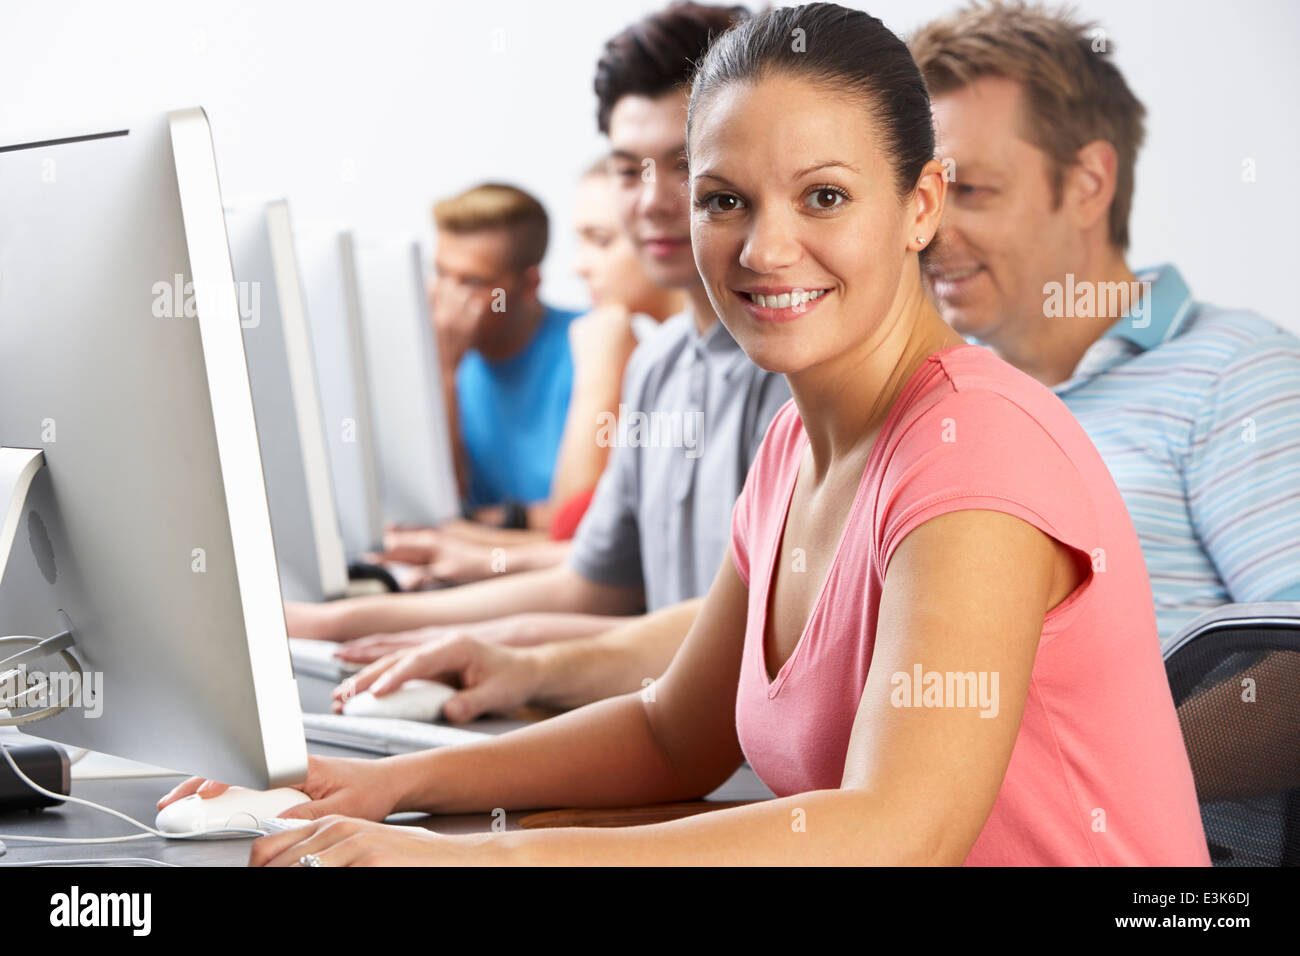 Gruppe von Studenten In Computer-Klasse Stockfoto